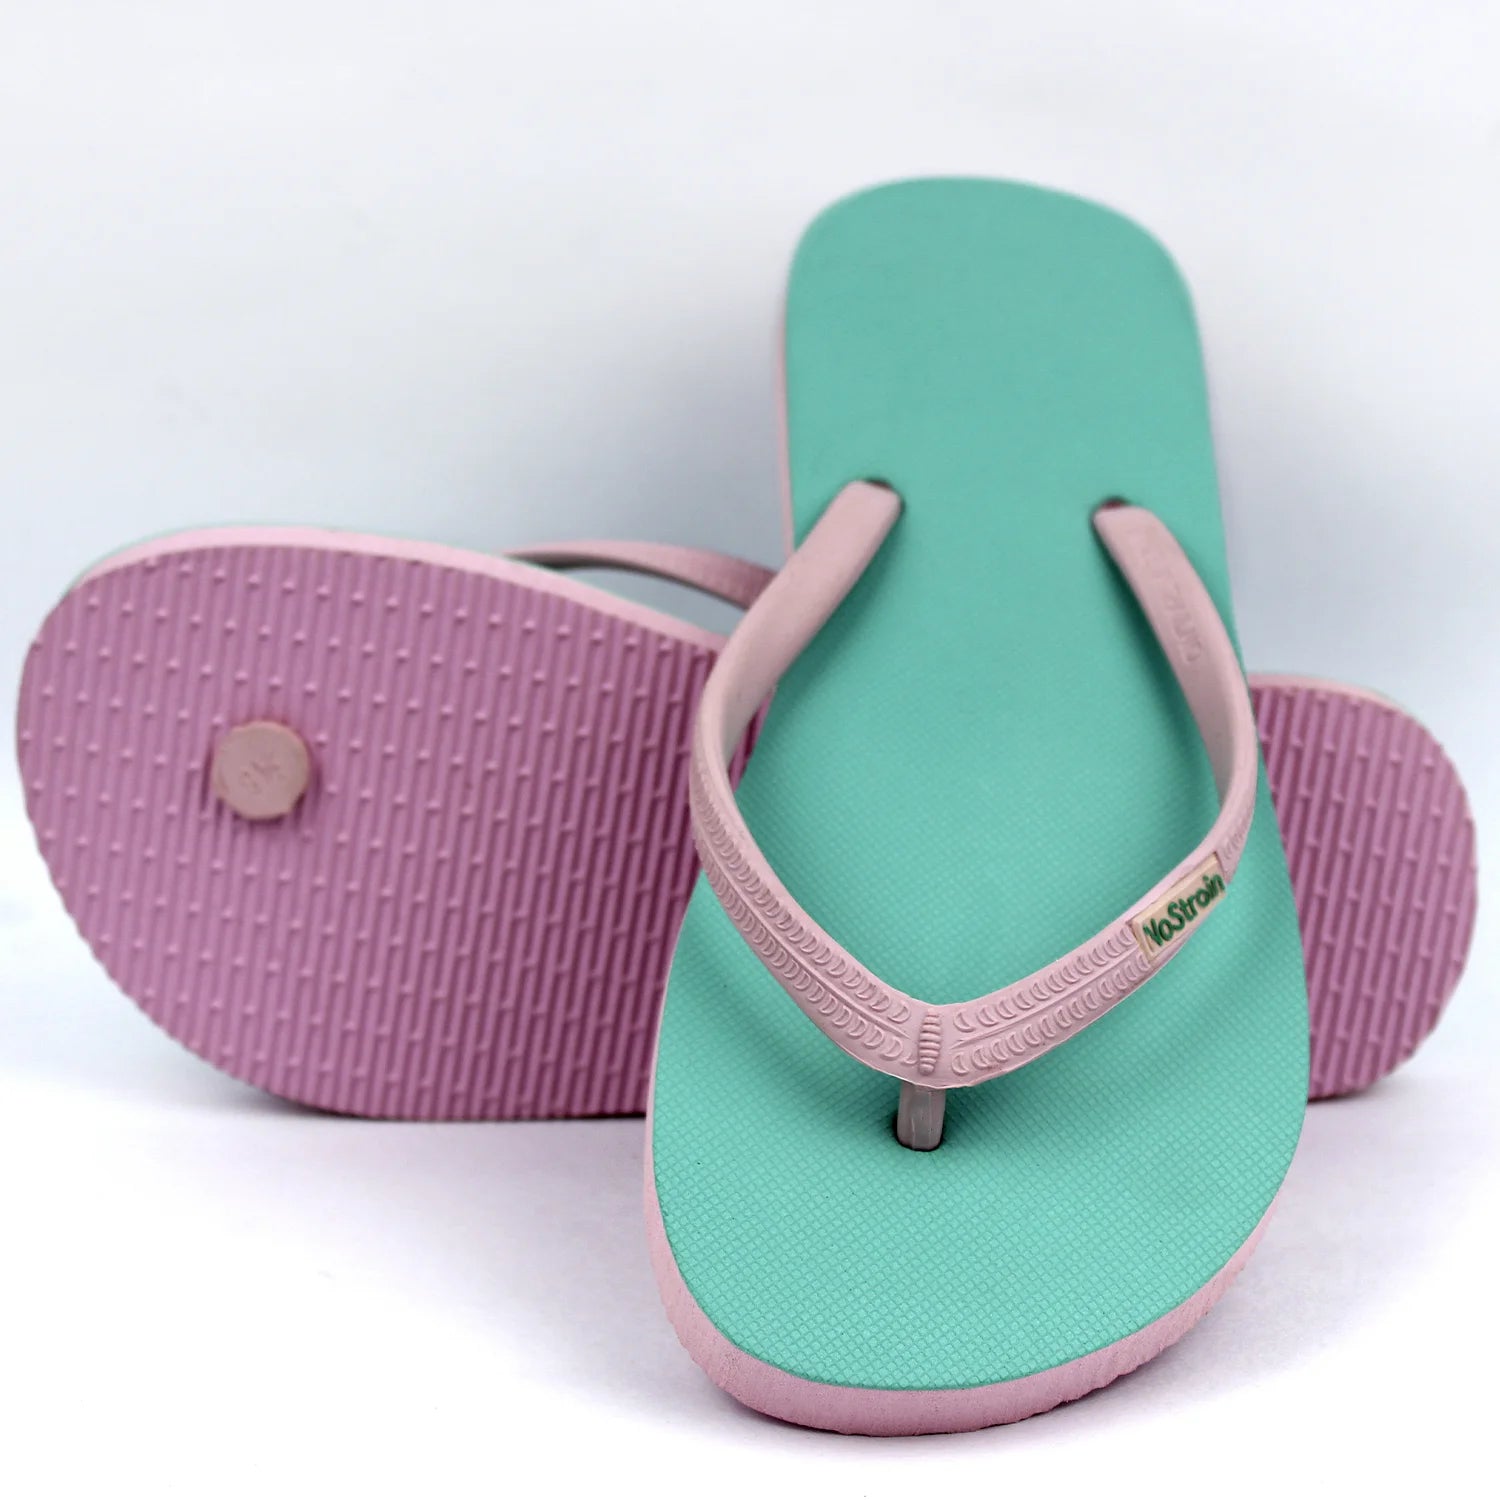 Sea Green & Pink Flip-Flops (Women)